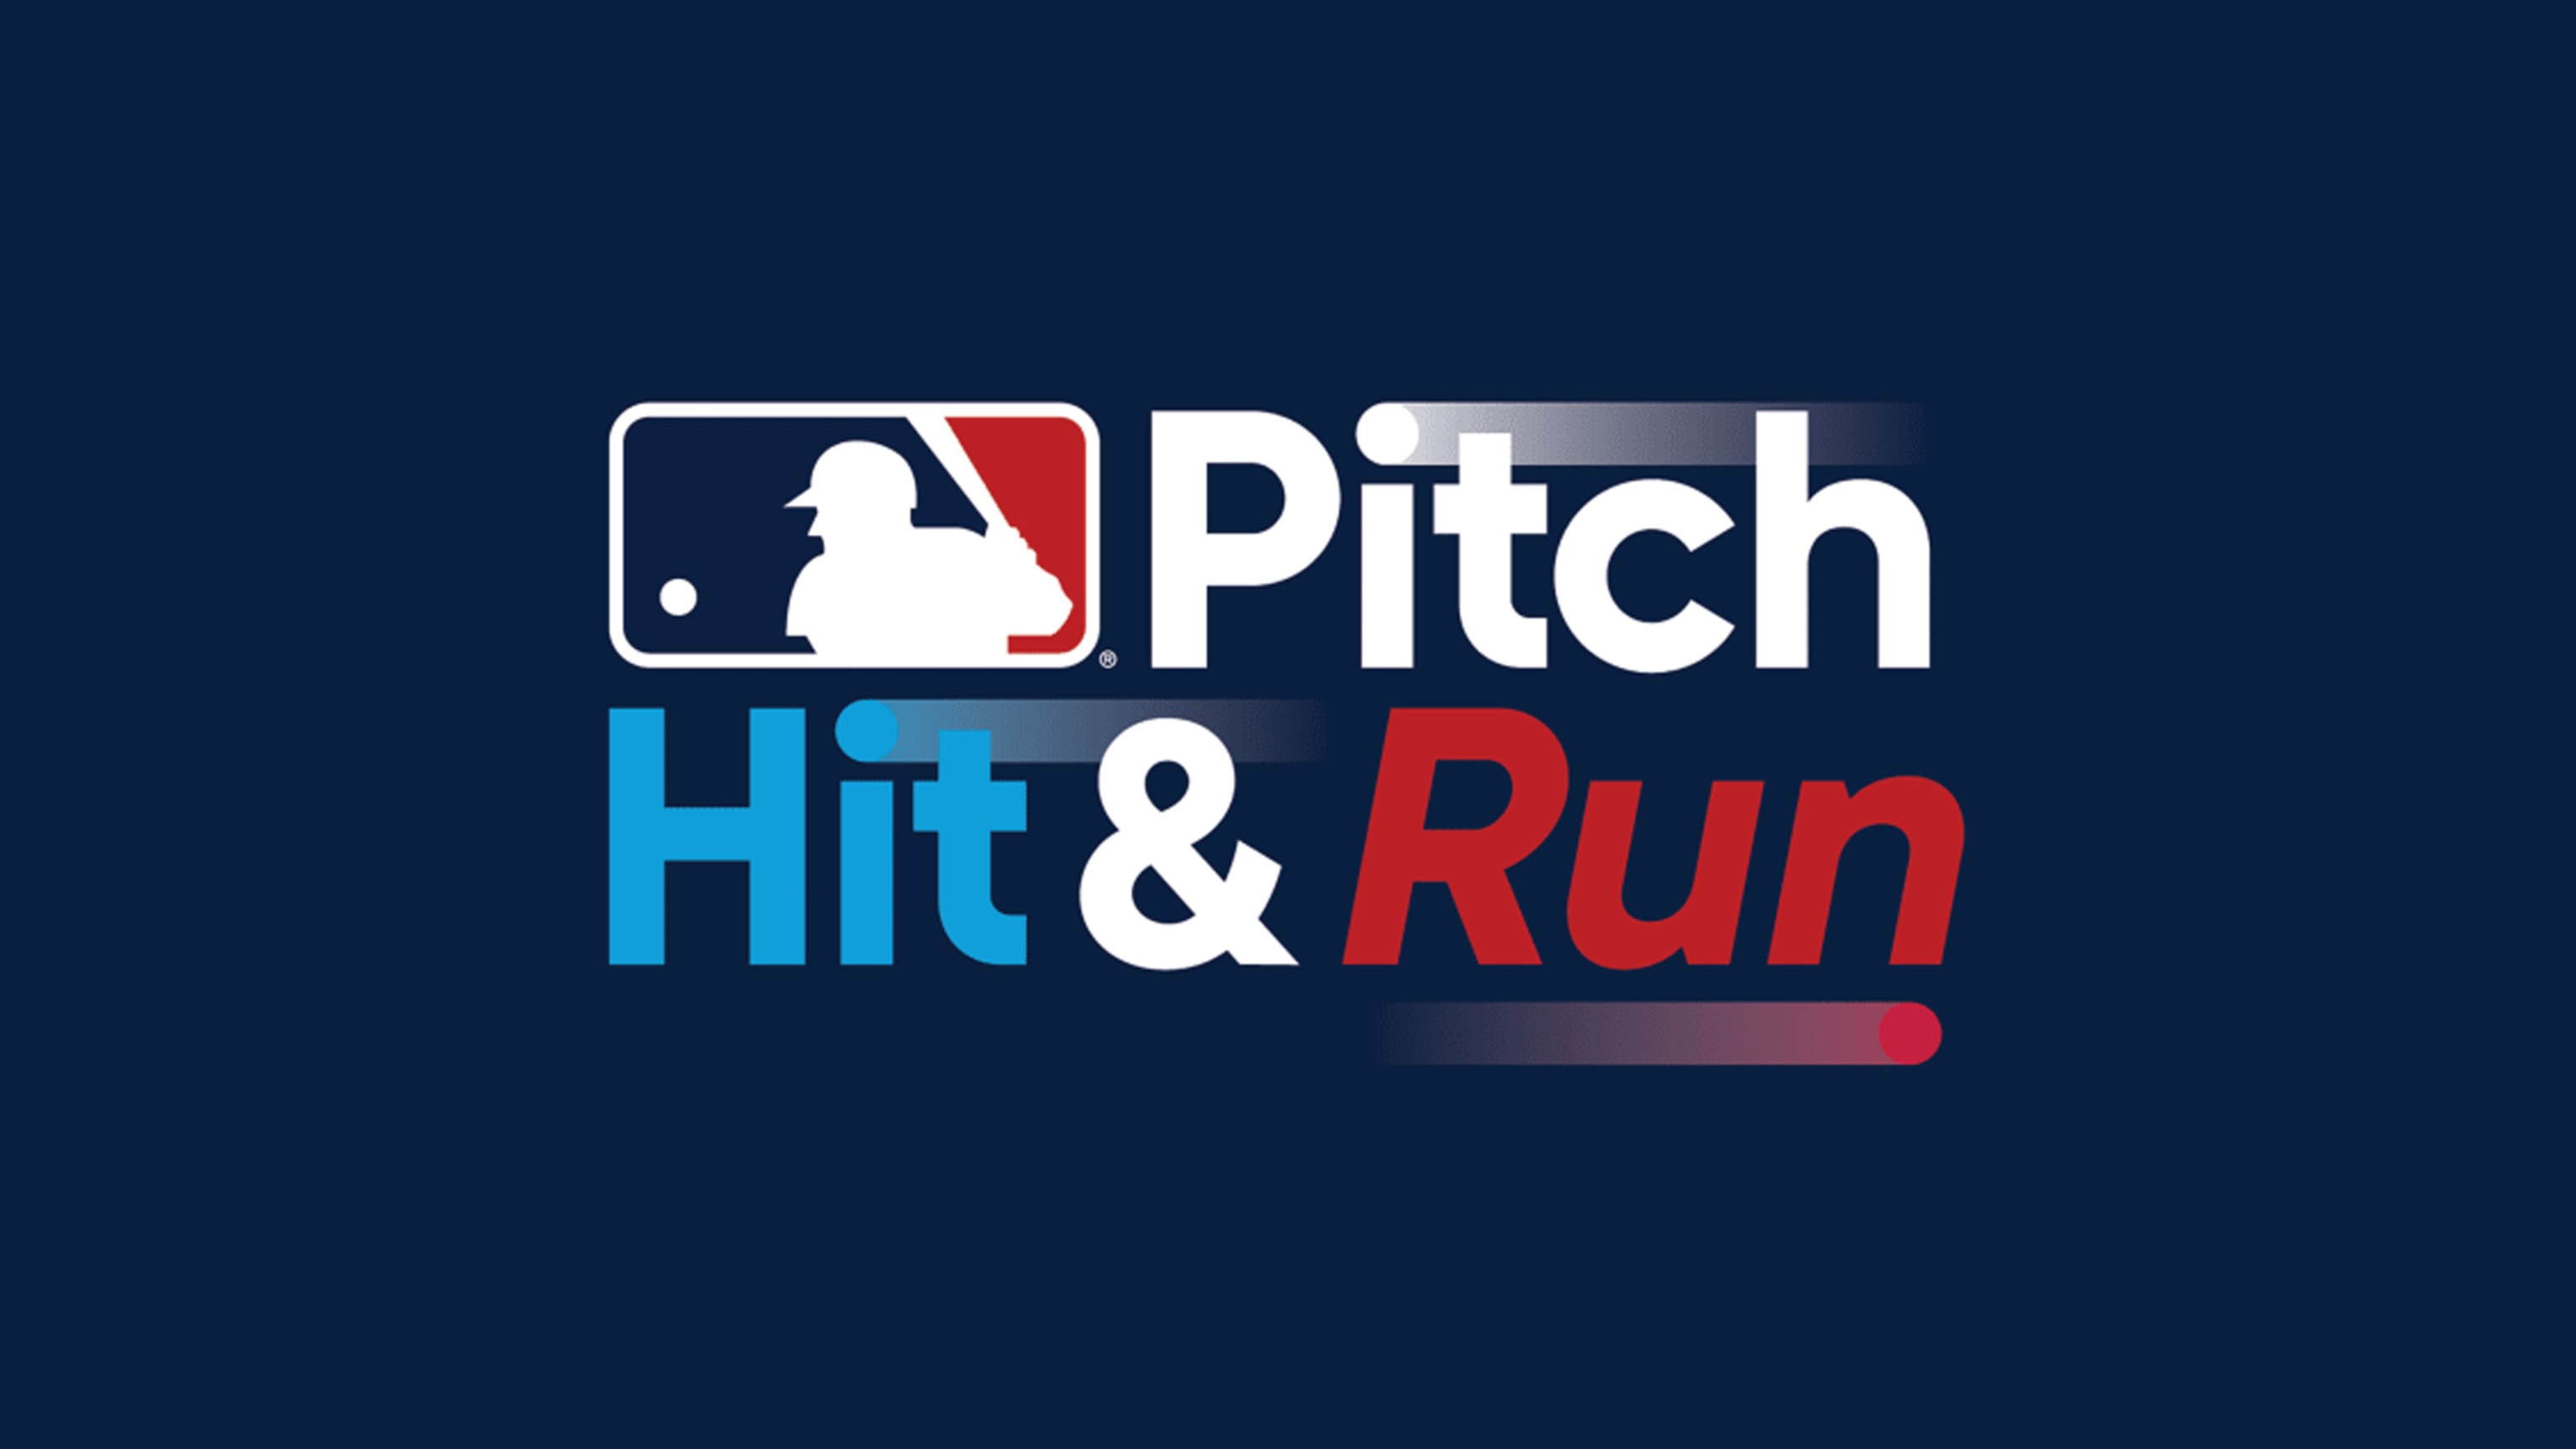 Home of Major League Baseball's Pitch Hit & Run program